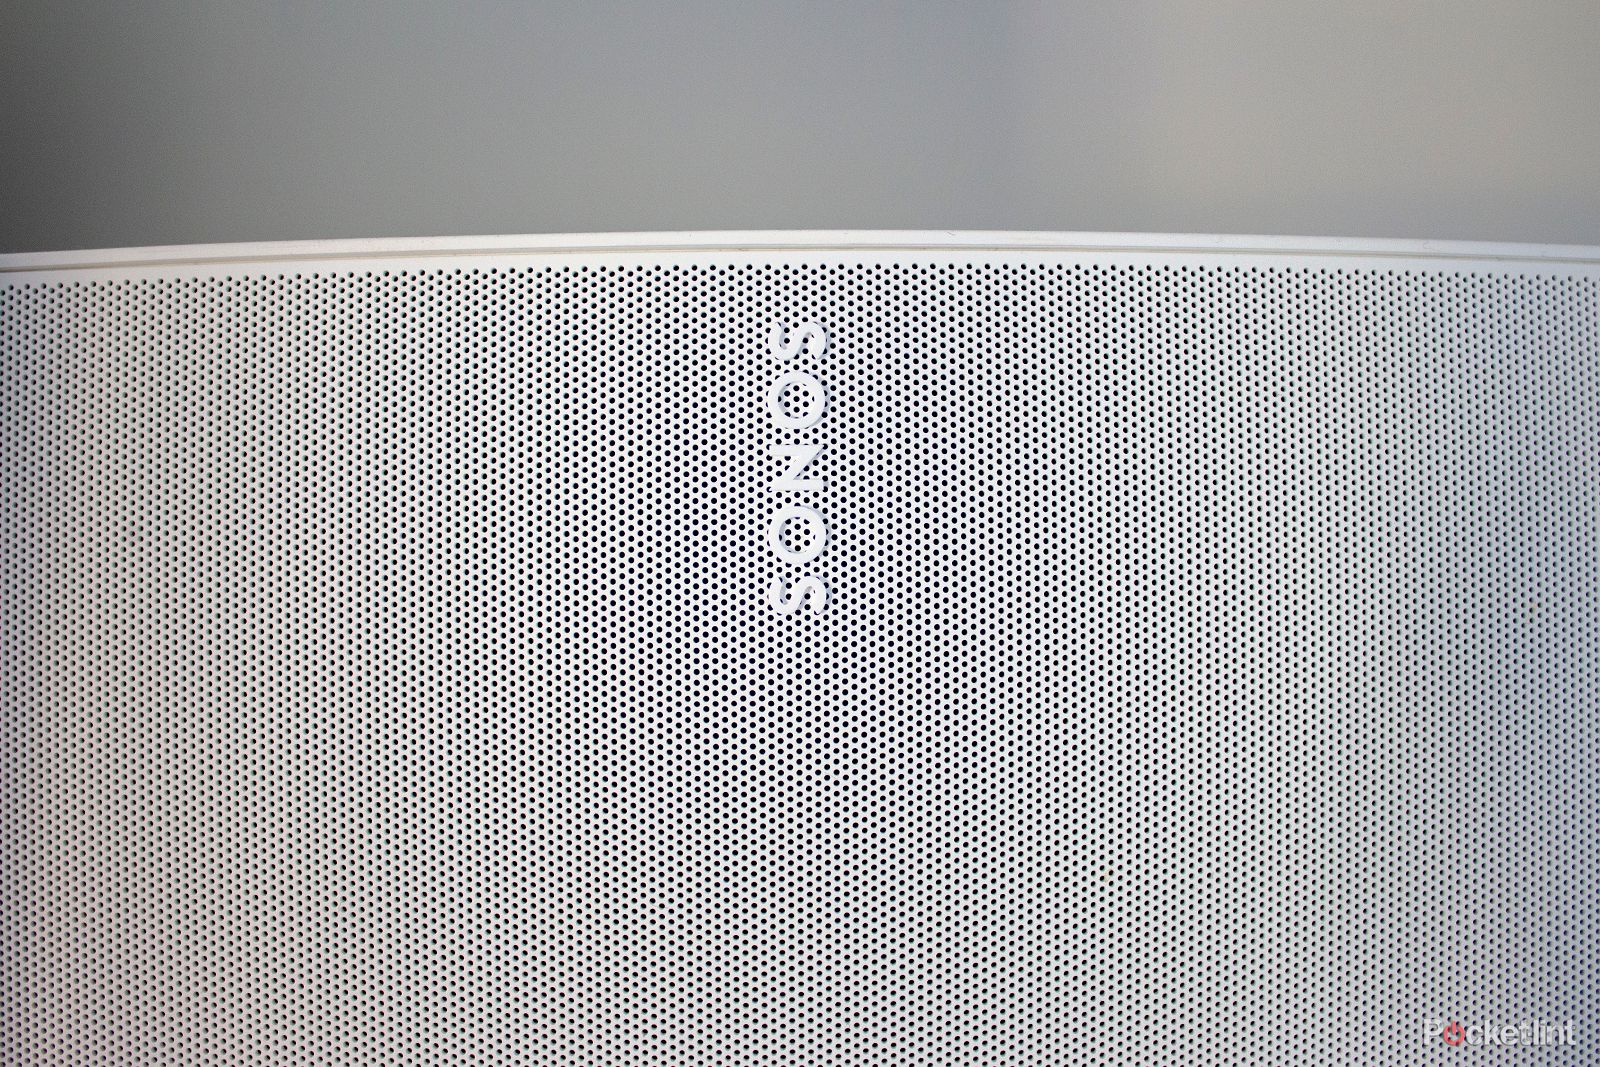 Sonos voice assistant leak: Latest evidence suggests it works alongside Alexa photo 1